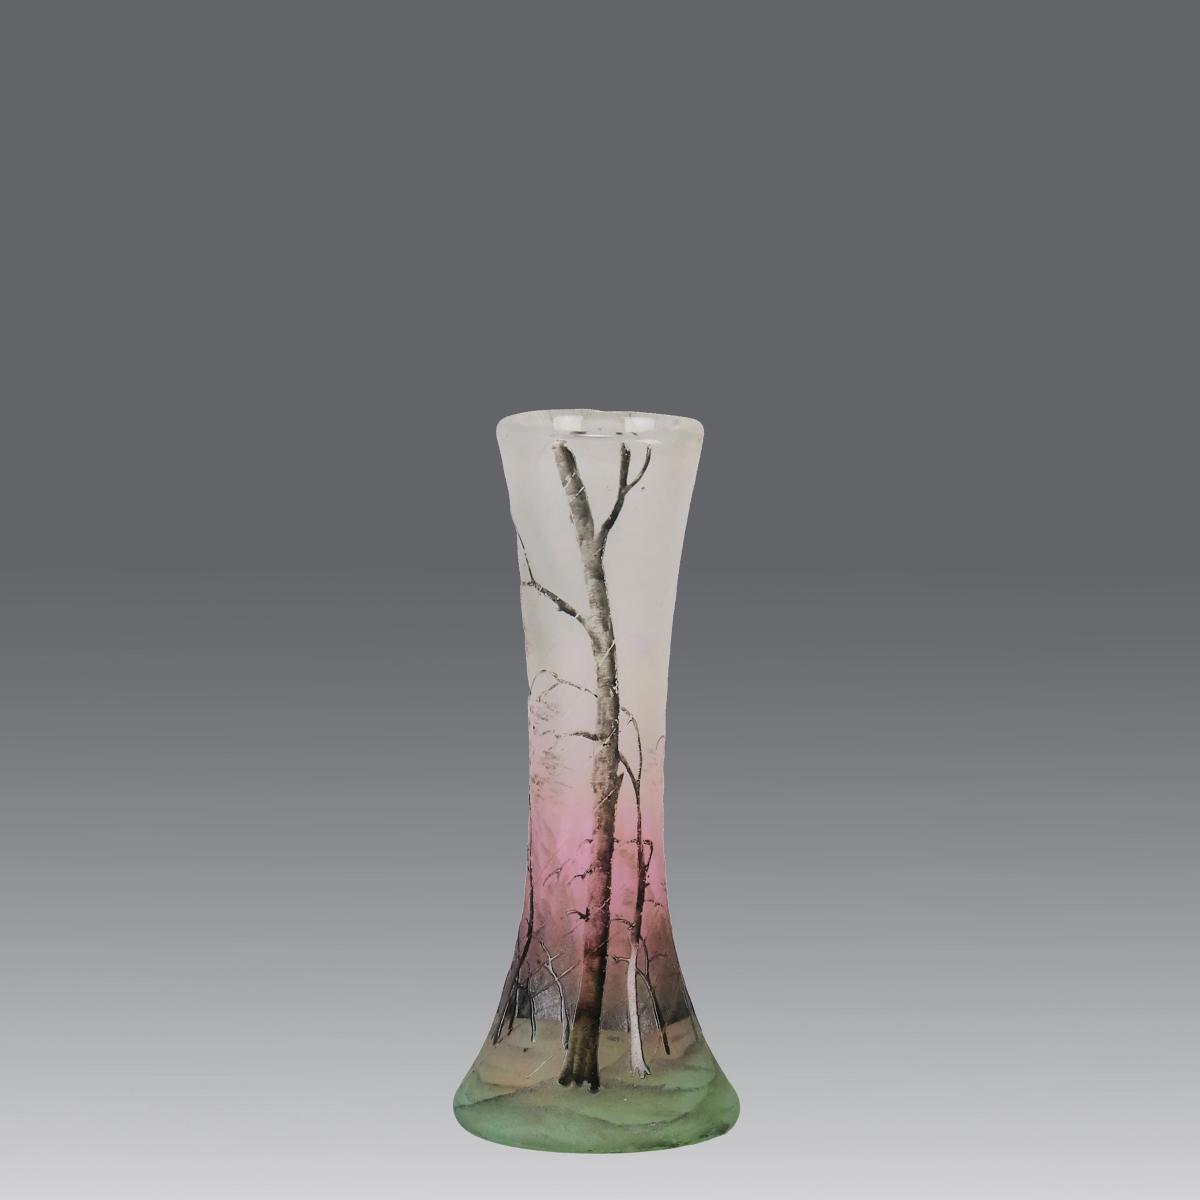 Early 20th Century Art Nouveau Cameo Glass Vase entitled "Paysage Pluie" by Daum Frères